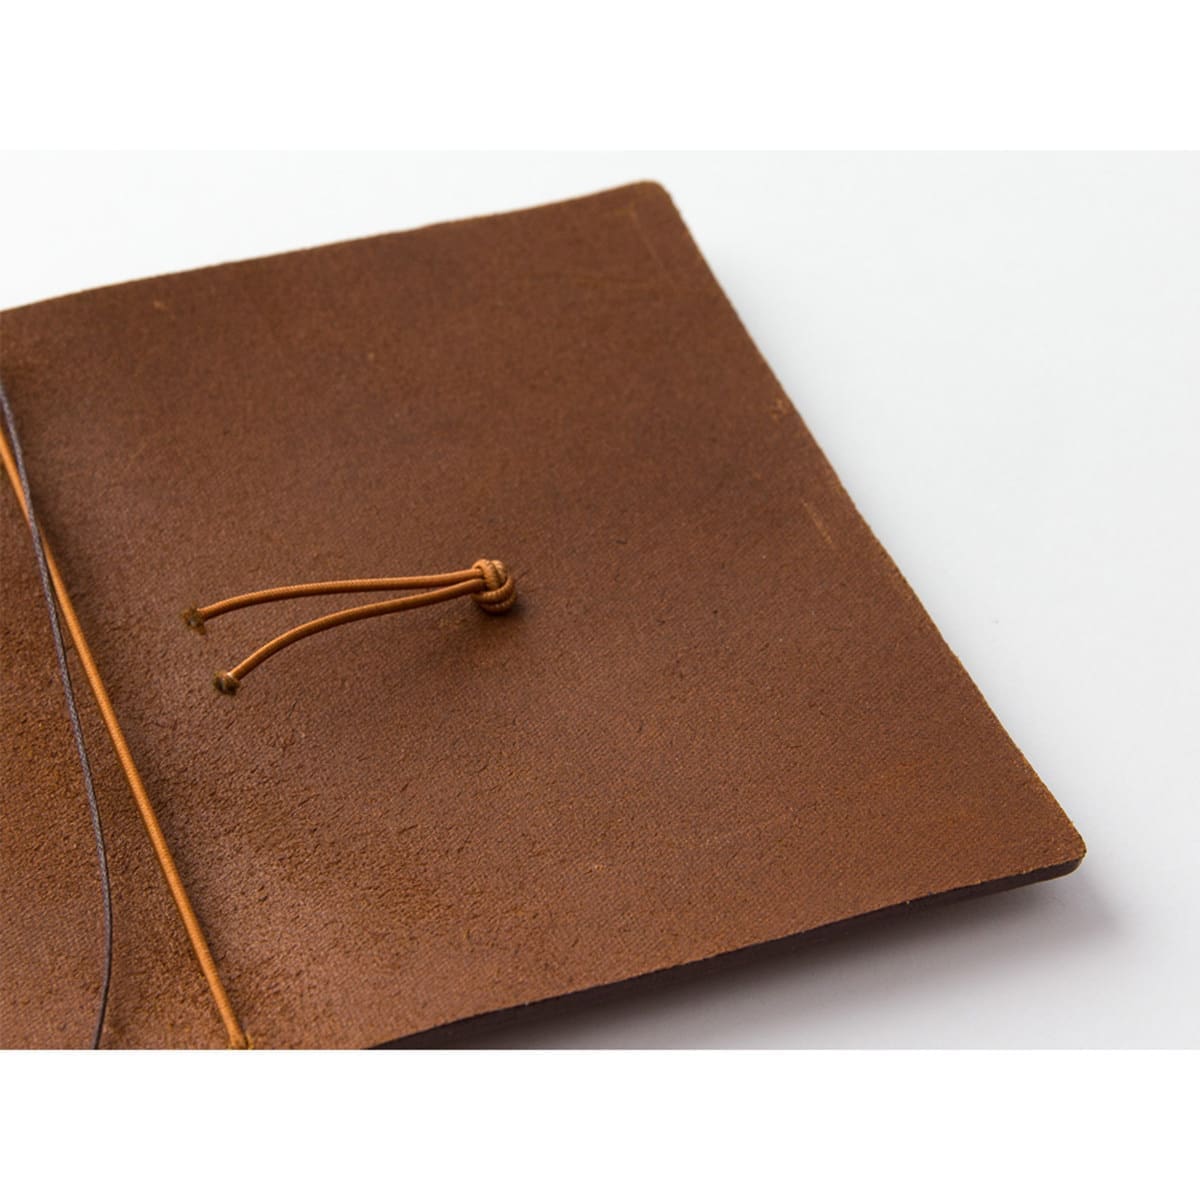 TRAVELER'S notebook Passport Leather Cover Camel - Traveler's Company - Tidformera